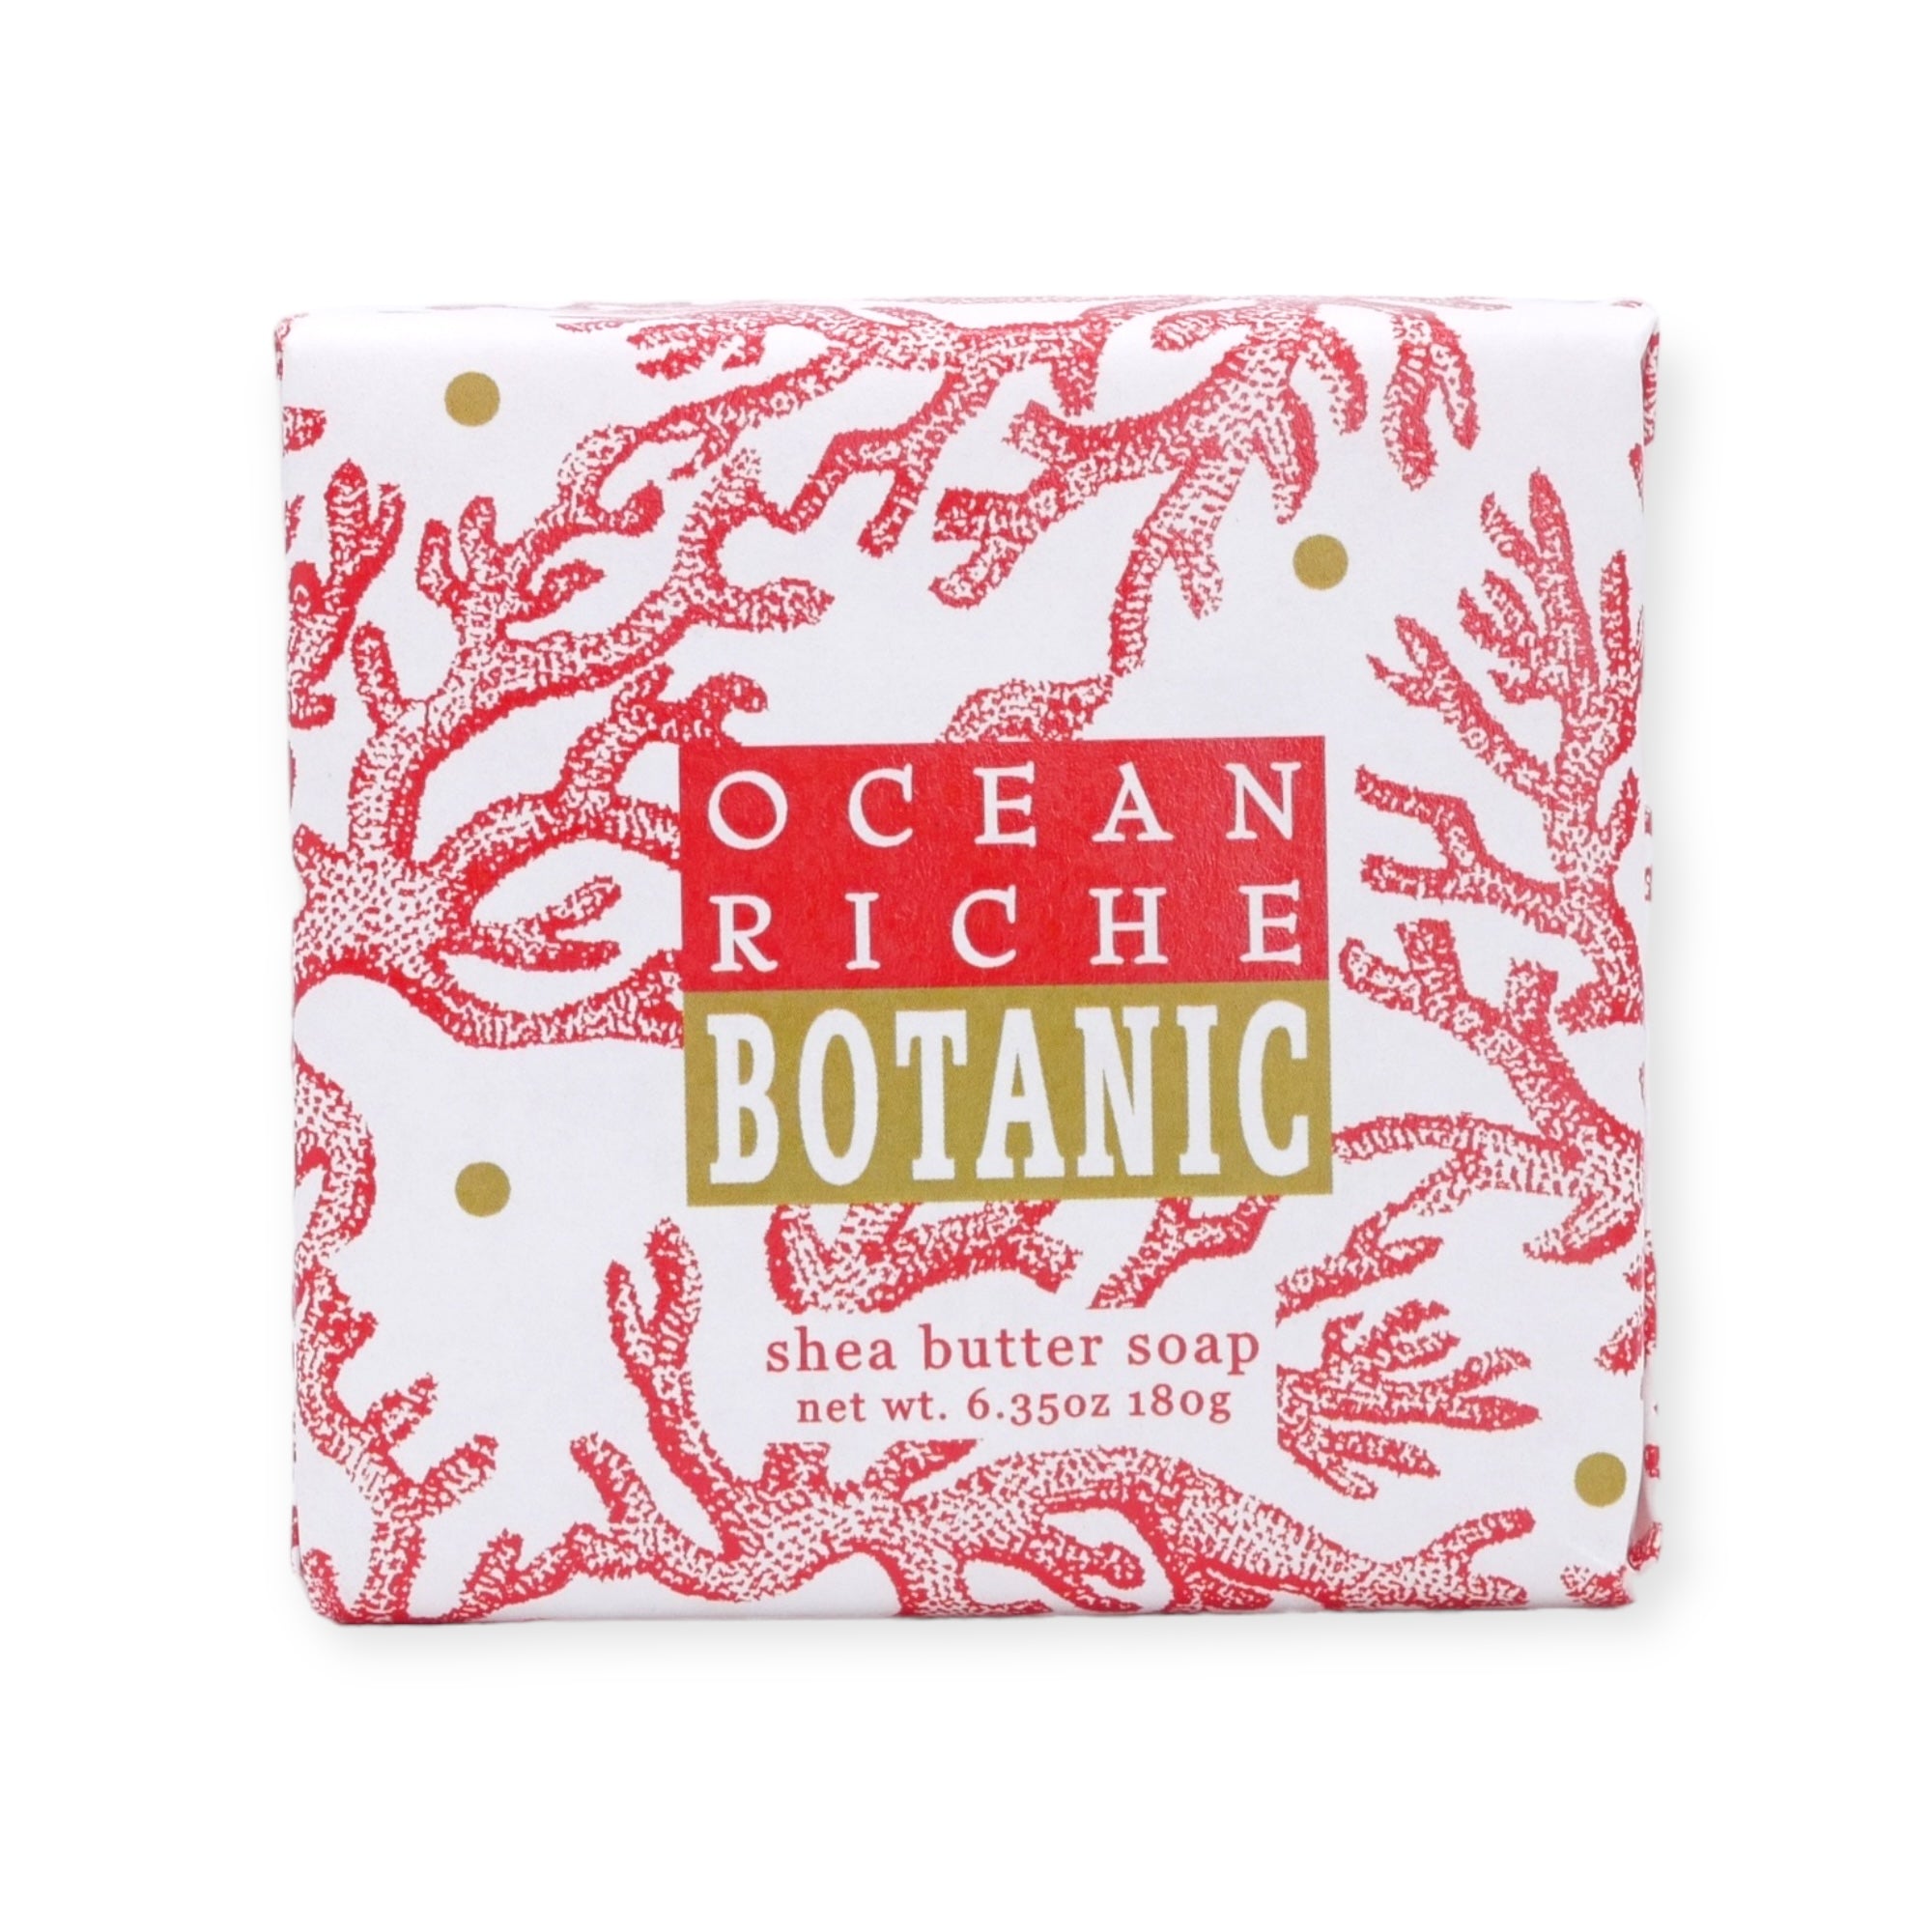 Ocean Riche Botanic Shea Butter Soap by Greenwich Bay Trading Co.